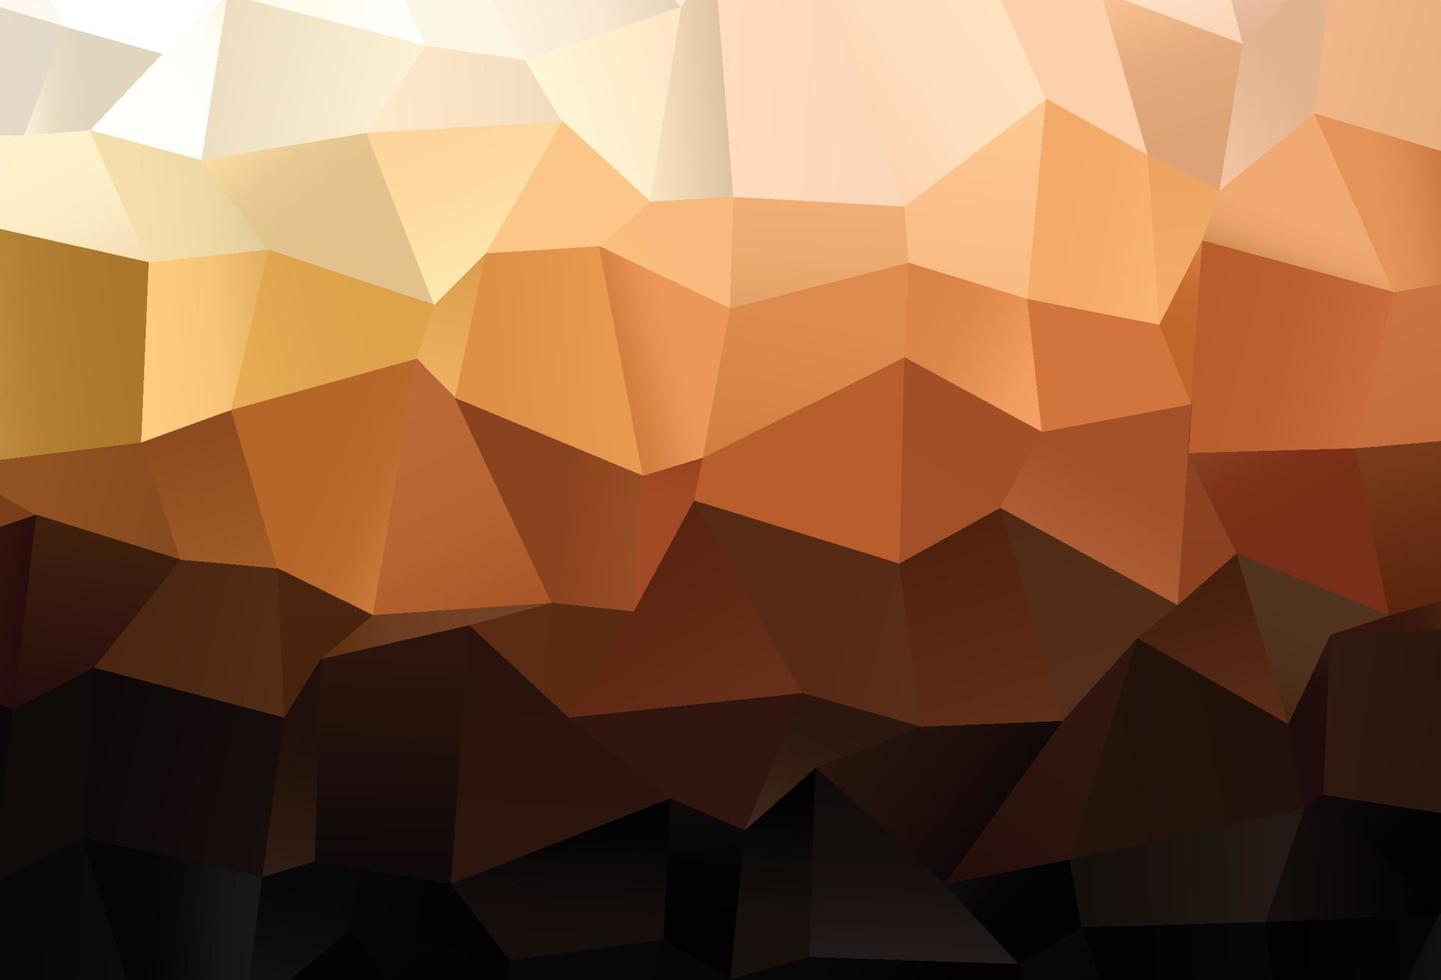 mörk orange vektor polygon abstrakt bakgrund.